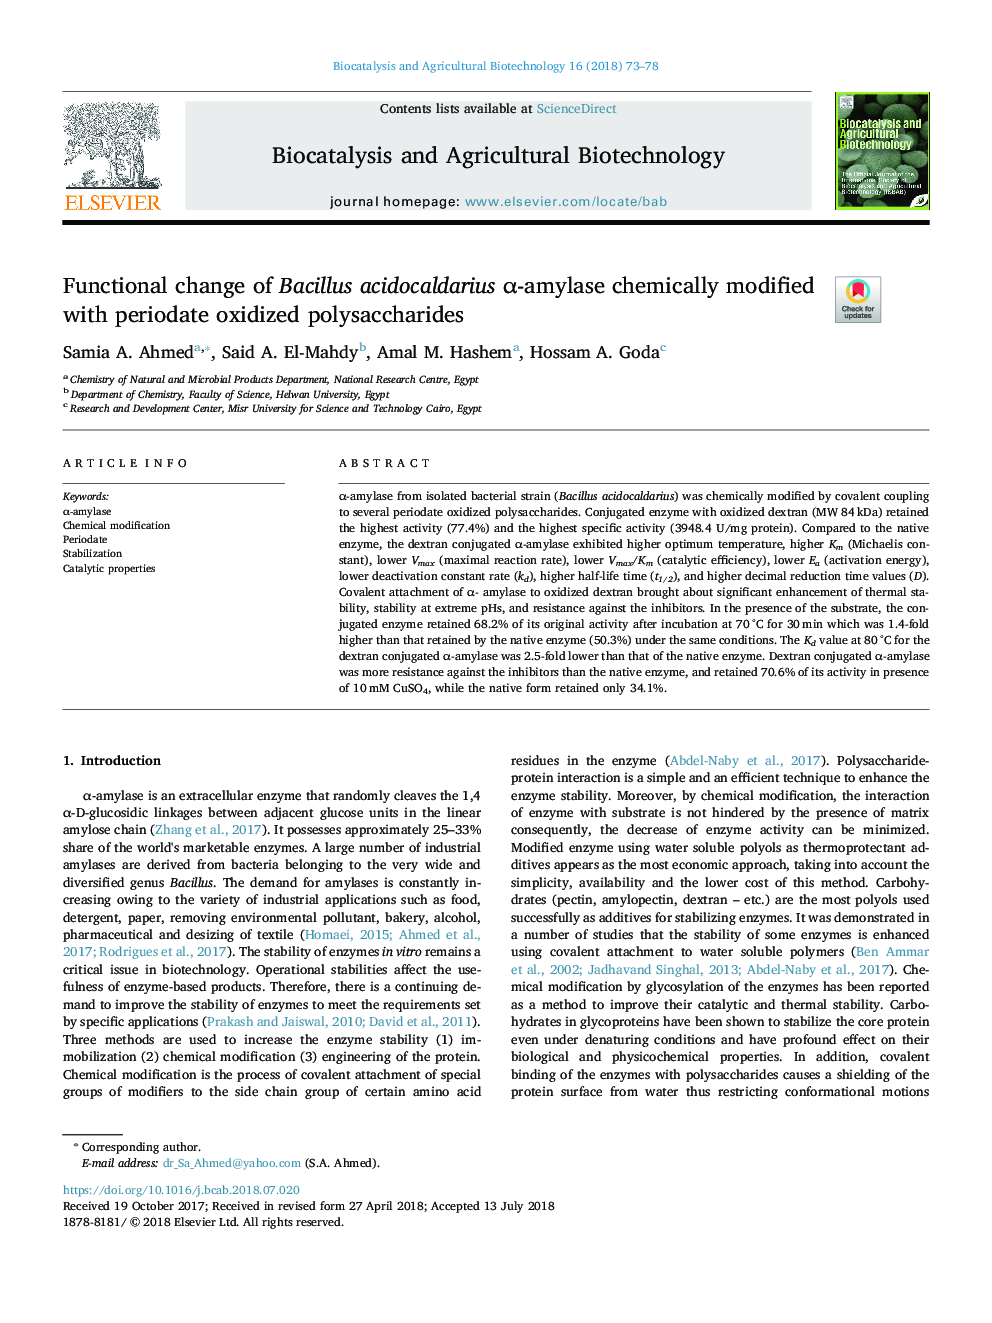 Functional change of Bacillus acidocaldarius Î±-amylase chemically modified with periodate oxidized polysaccharides